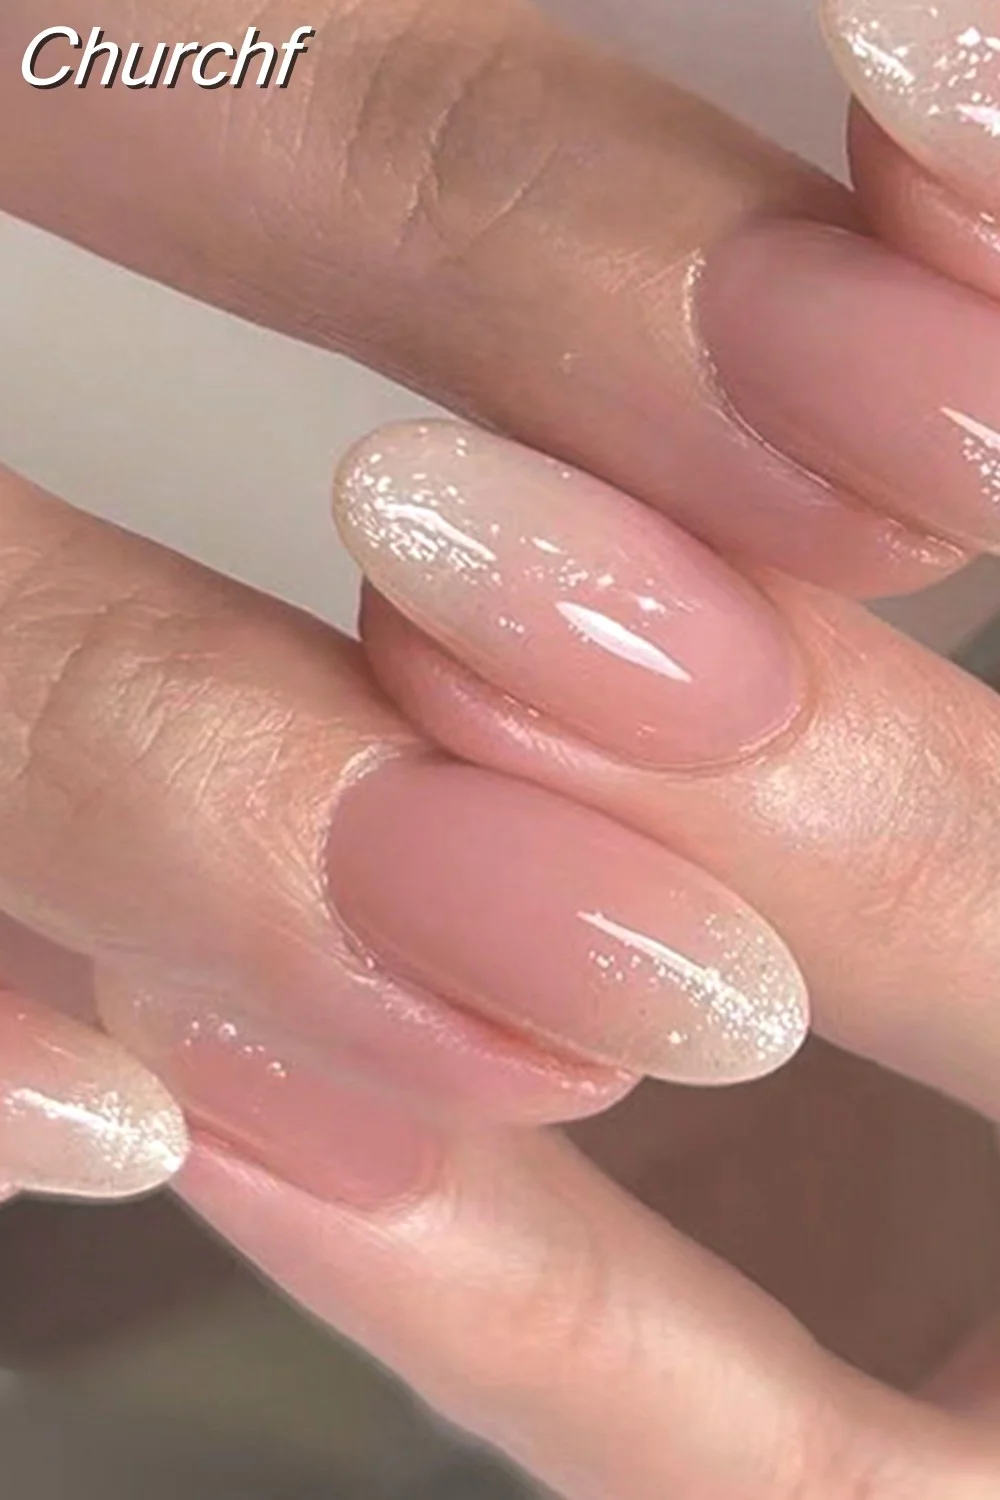 Churchf Glitter Short Almond False Nails Pink Aurora Ellipse Fake Nails Press on Nails DIY Manicure Detachable Full Cover Nail Tip 319-1